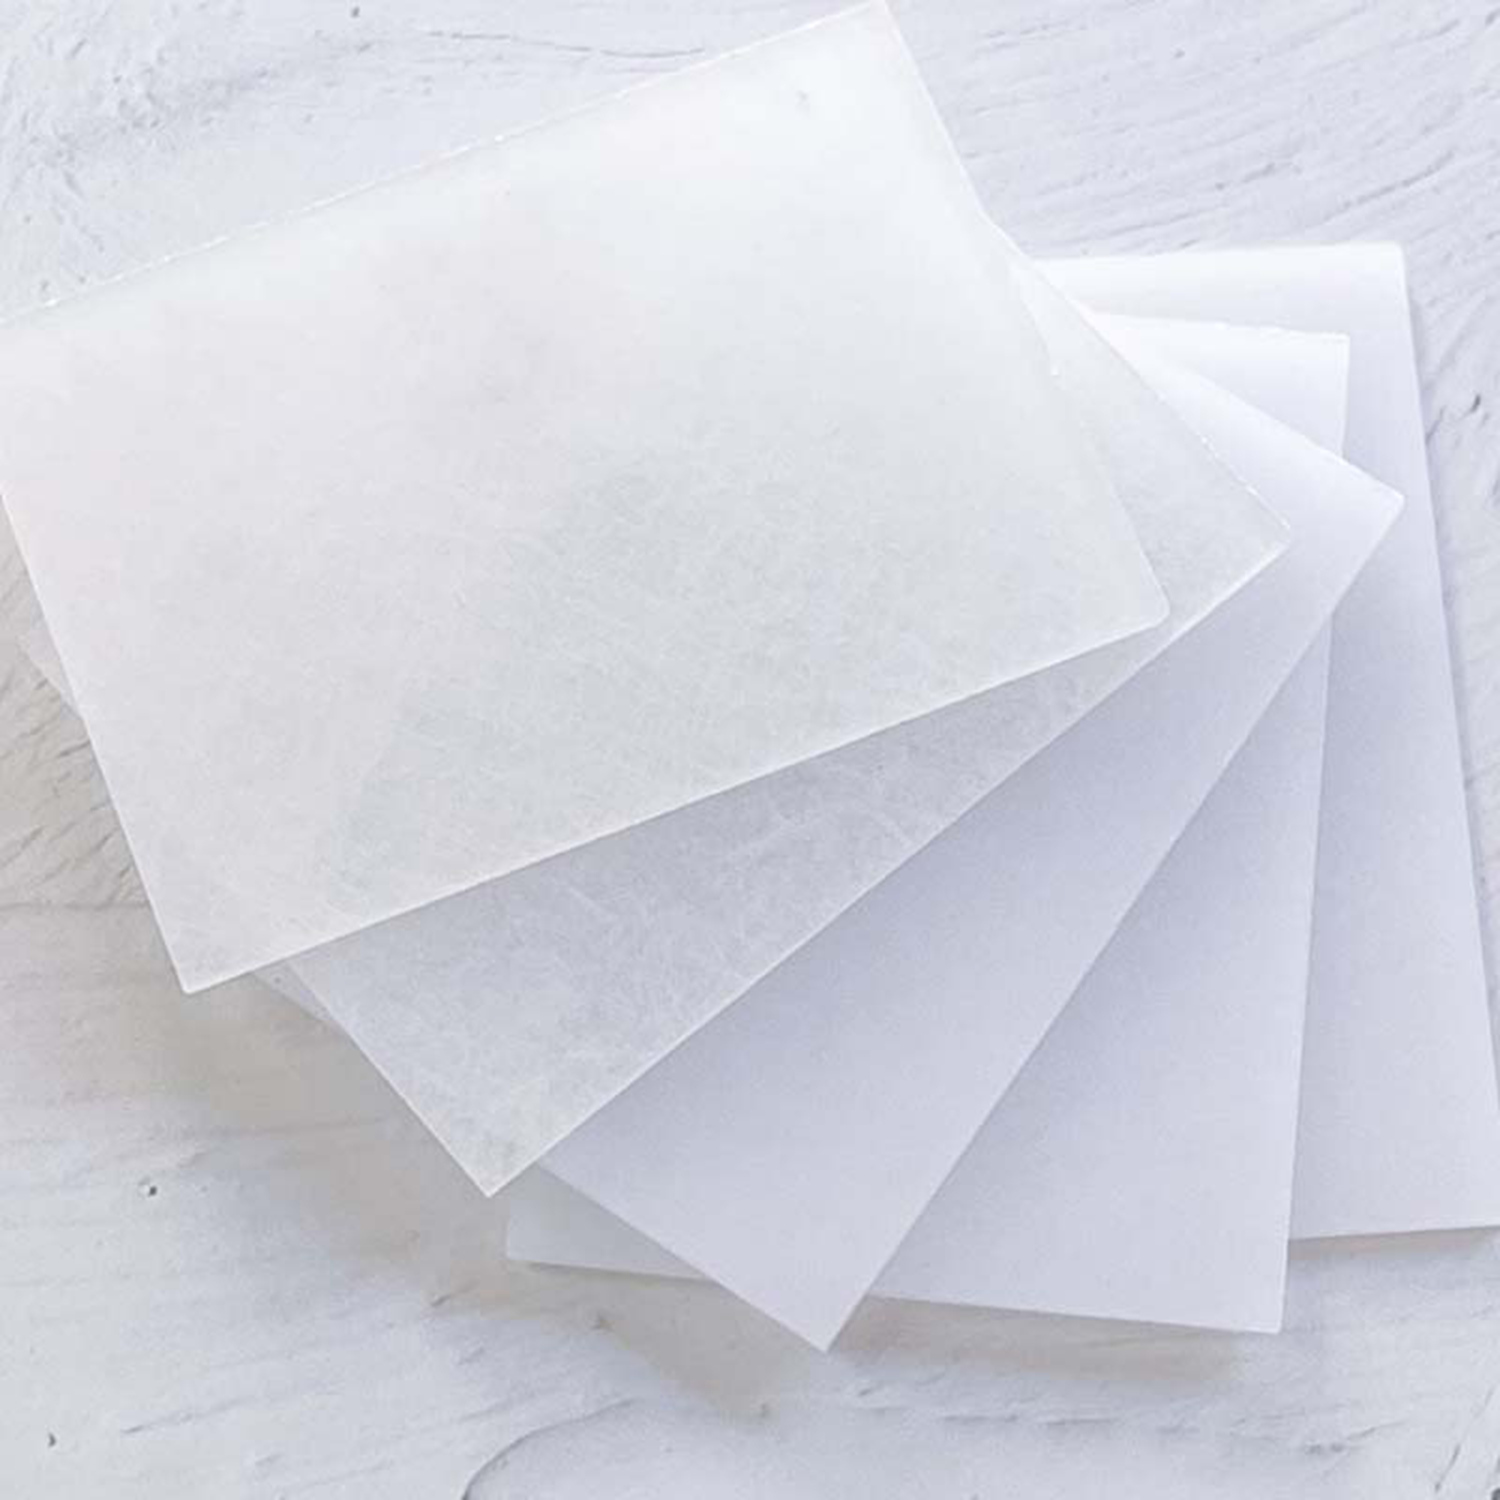 Termosellado de papel 8X11 STD x Paquete de 100 hojas -TP PAPER 8X11 STD-TIPI PAPER